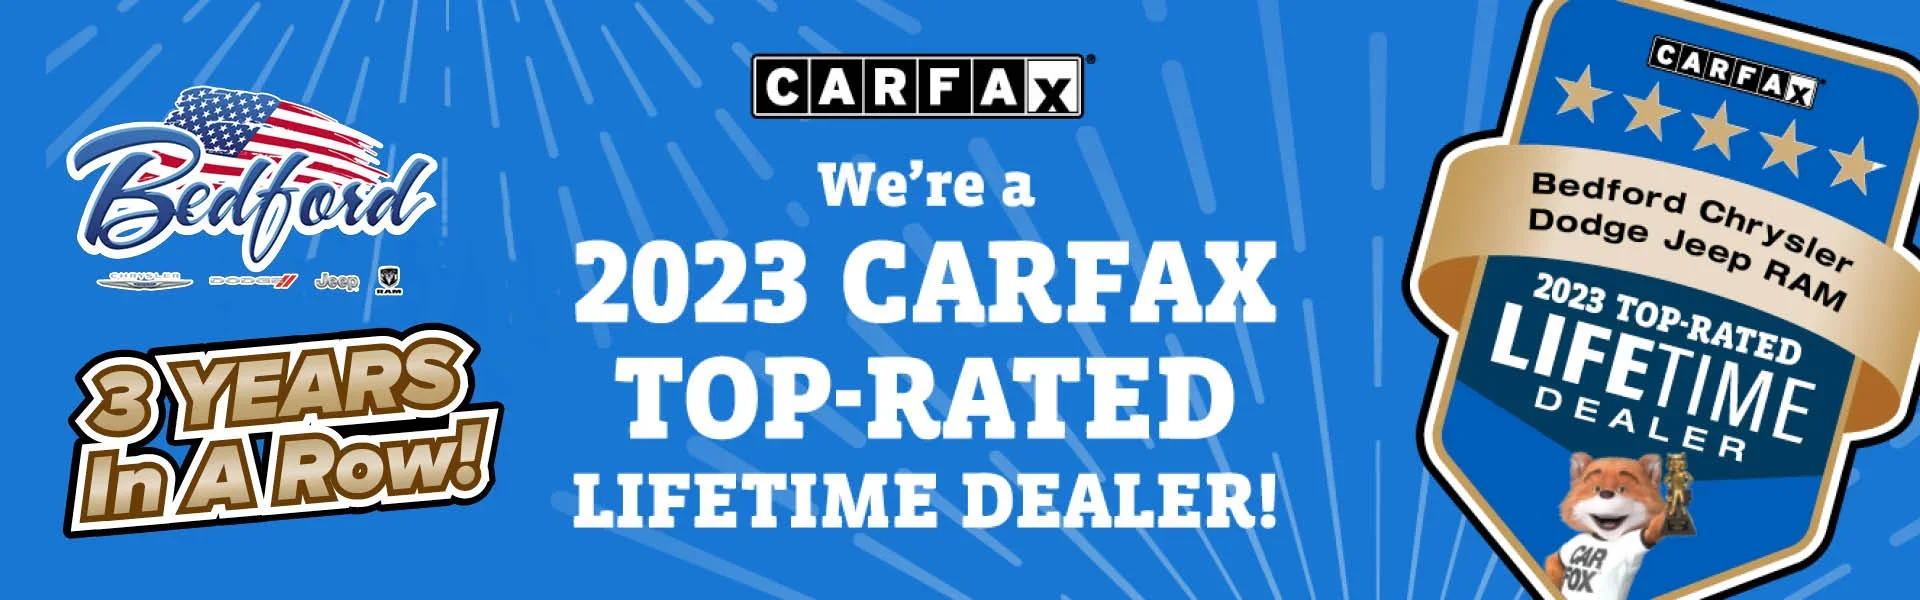 Carfax Top Rated Lifetime Dealer